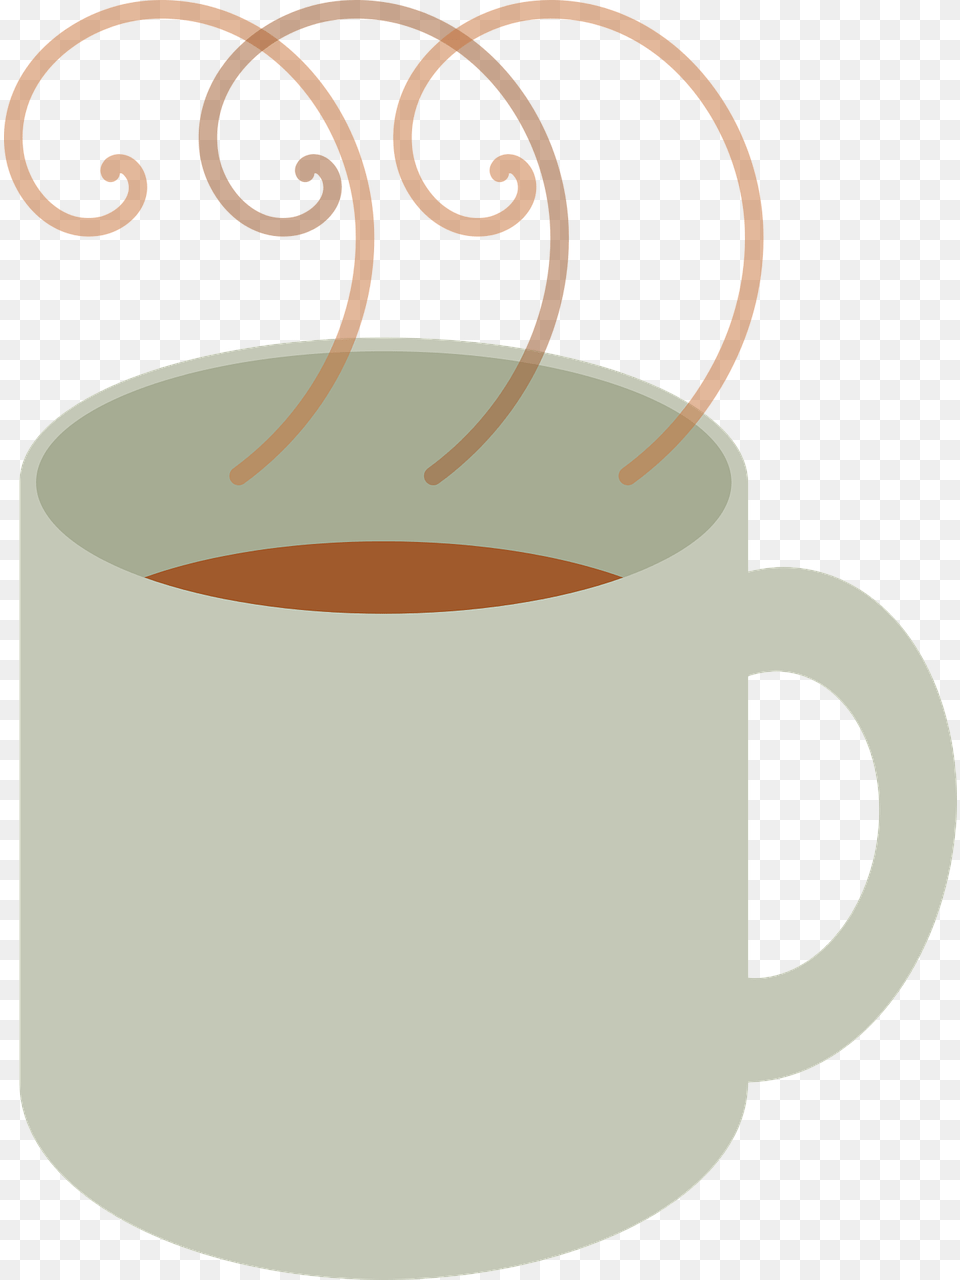 Coffee Mug Coffee Mug Steam Drink Morning Tea Coffee Mug Graphic, Cup, Beverage, Coffee Cup Free Png Download